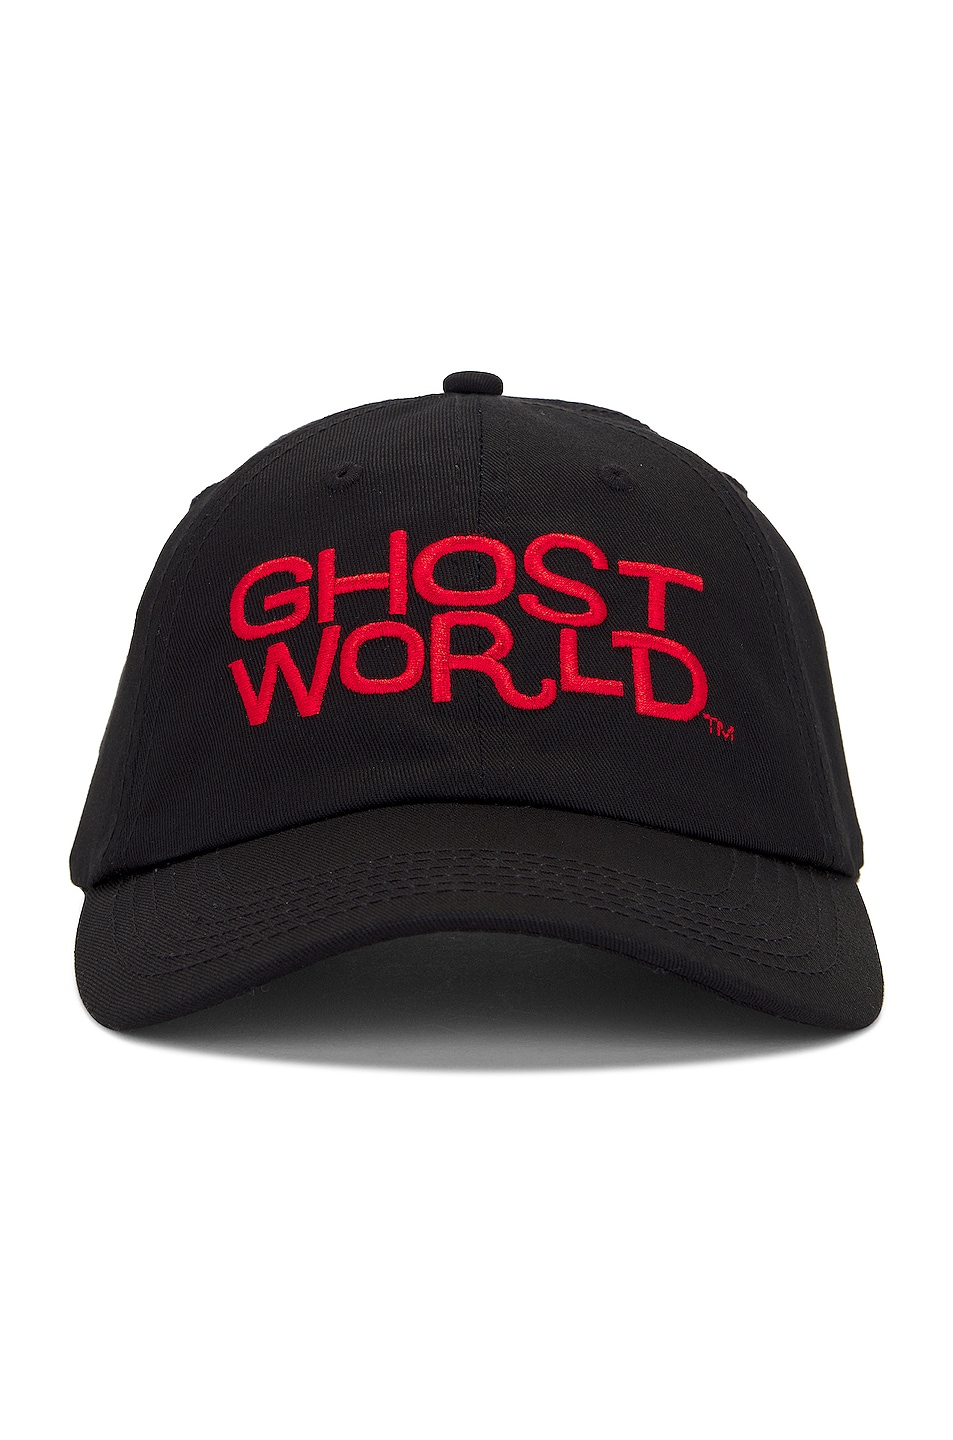 Ghost World Hat in Black